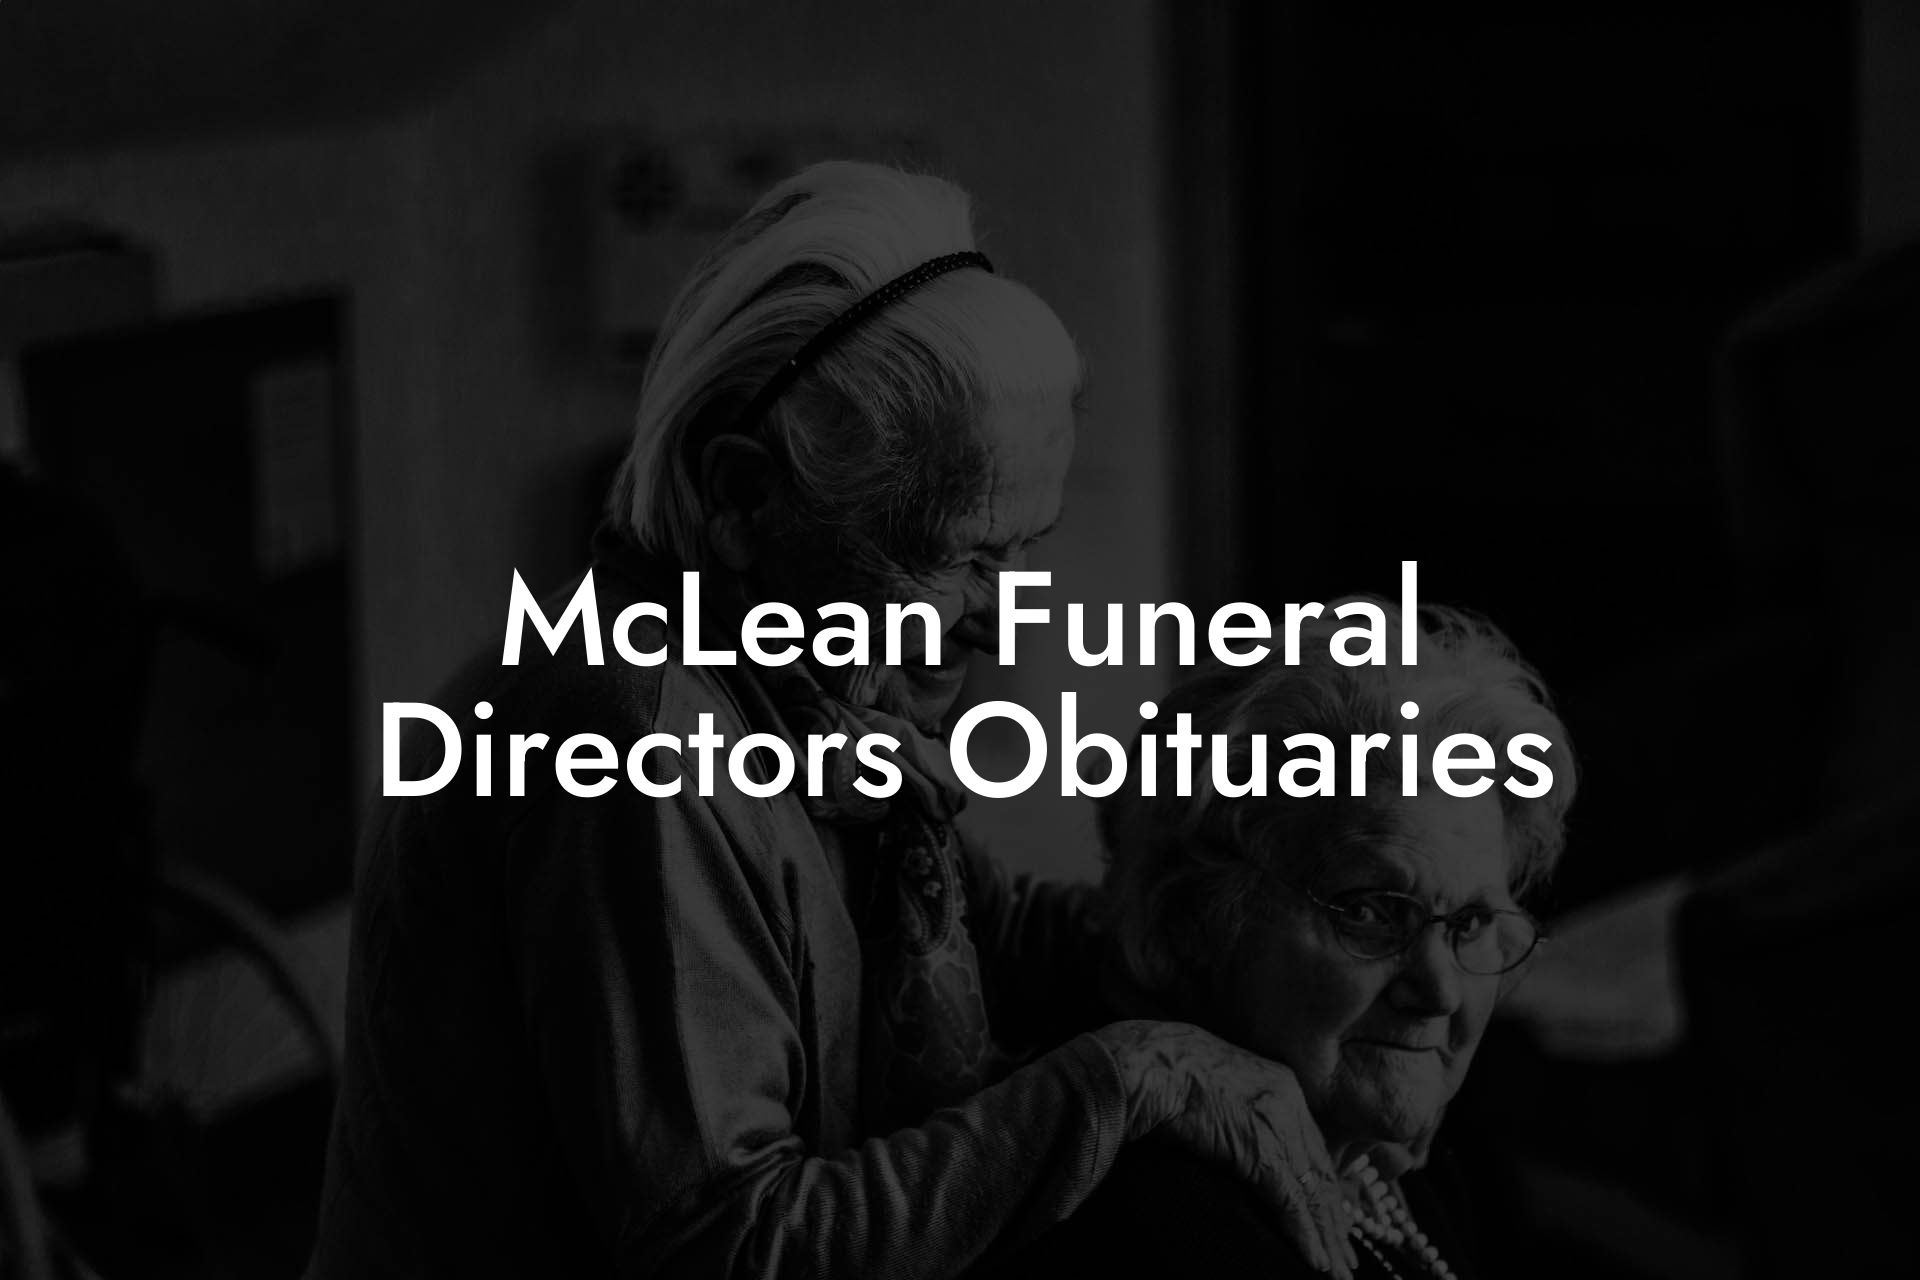 McLean Funeral Directors Obituaries